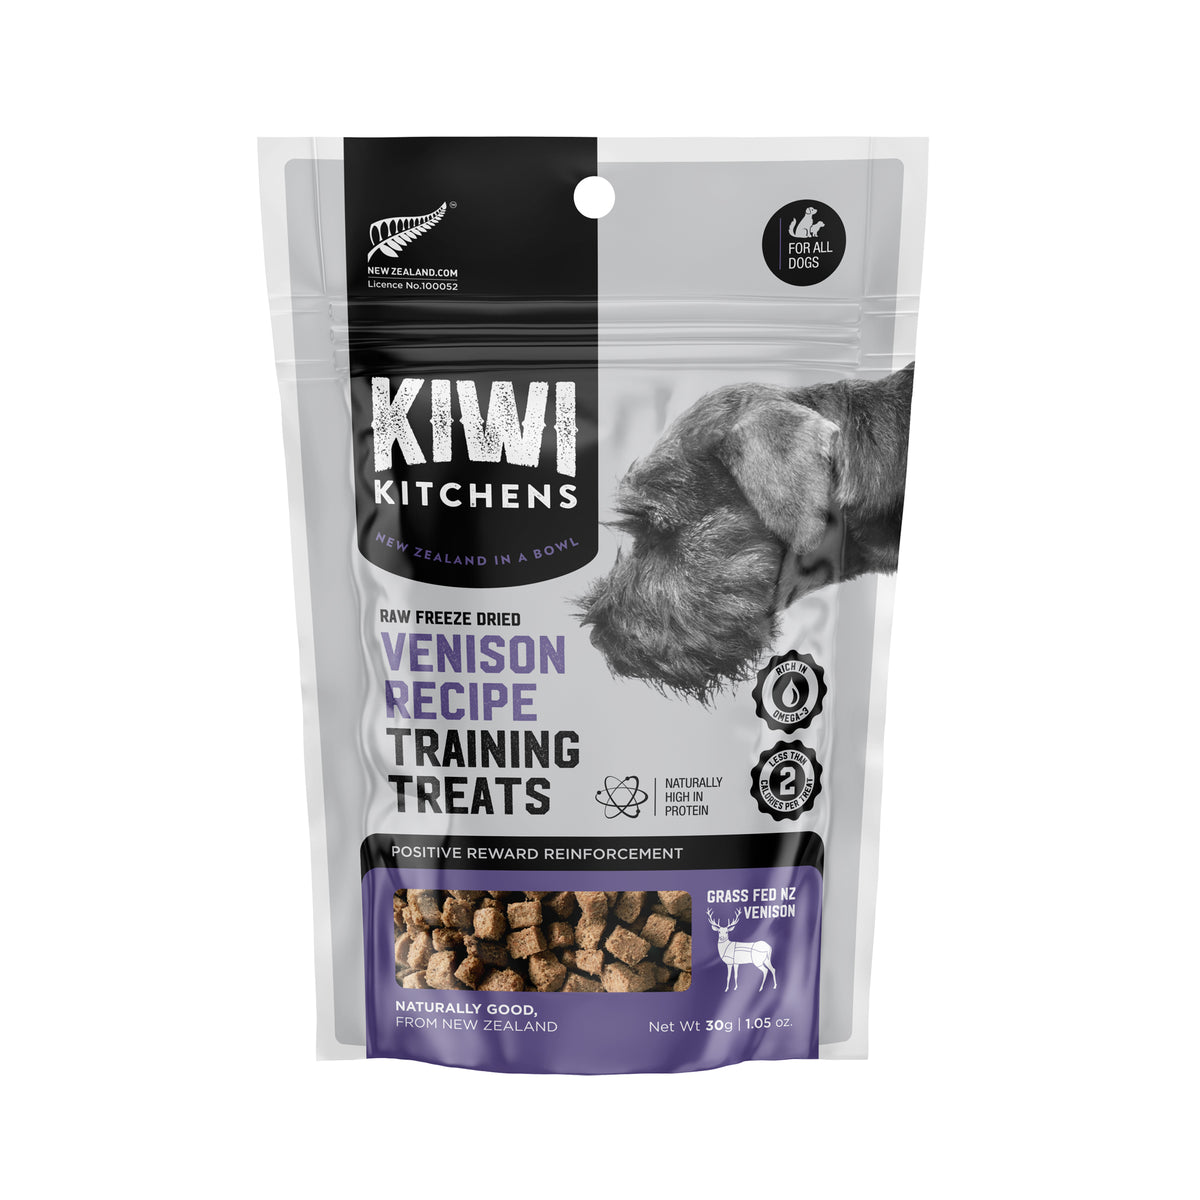 Kiwi Kitchens Raw Freeze Dried Venison Training Treats 30g